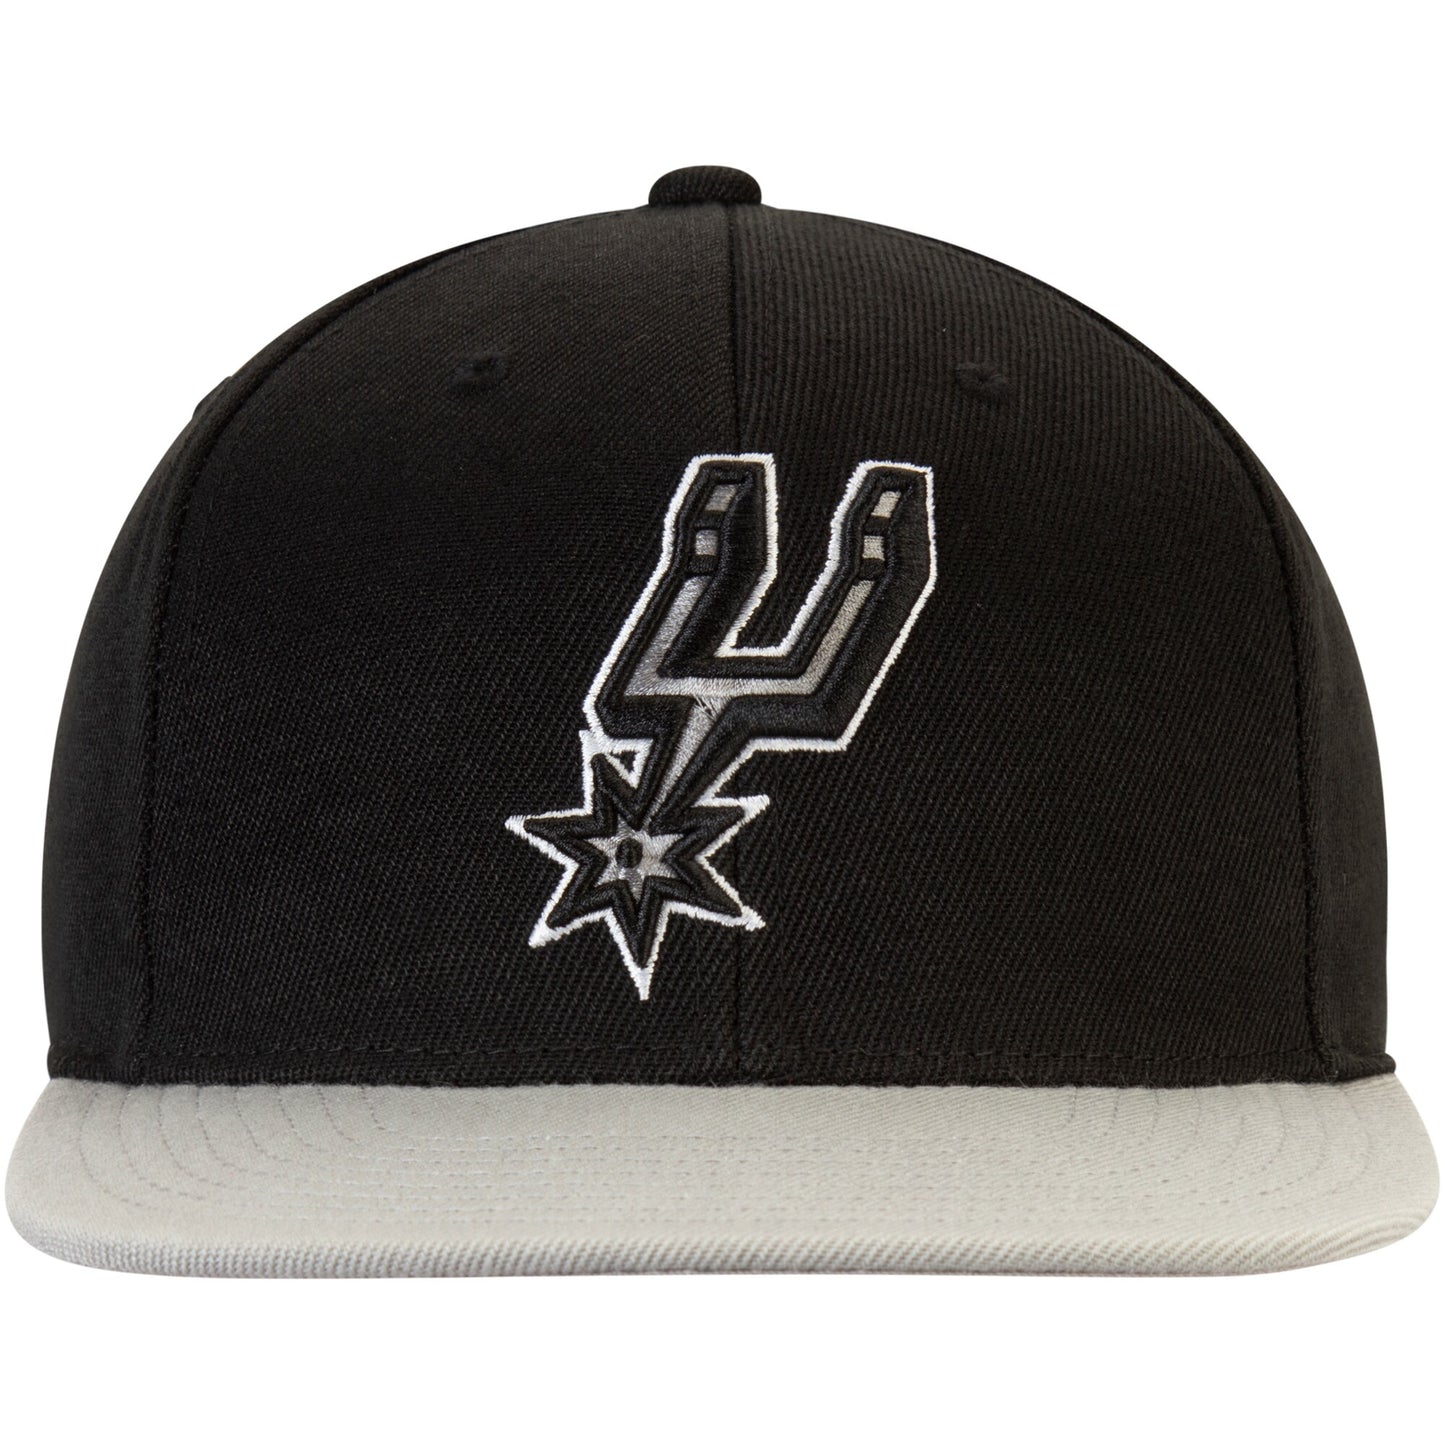 Men's Mitchell & Ness San Antonio Spurs Core 2 Tone Black/Gray Adjustable Snapback Hat